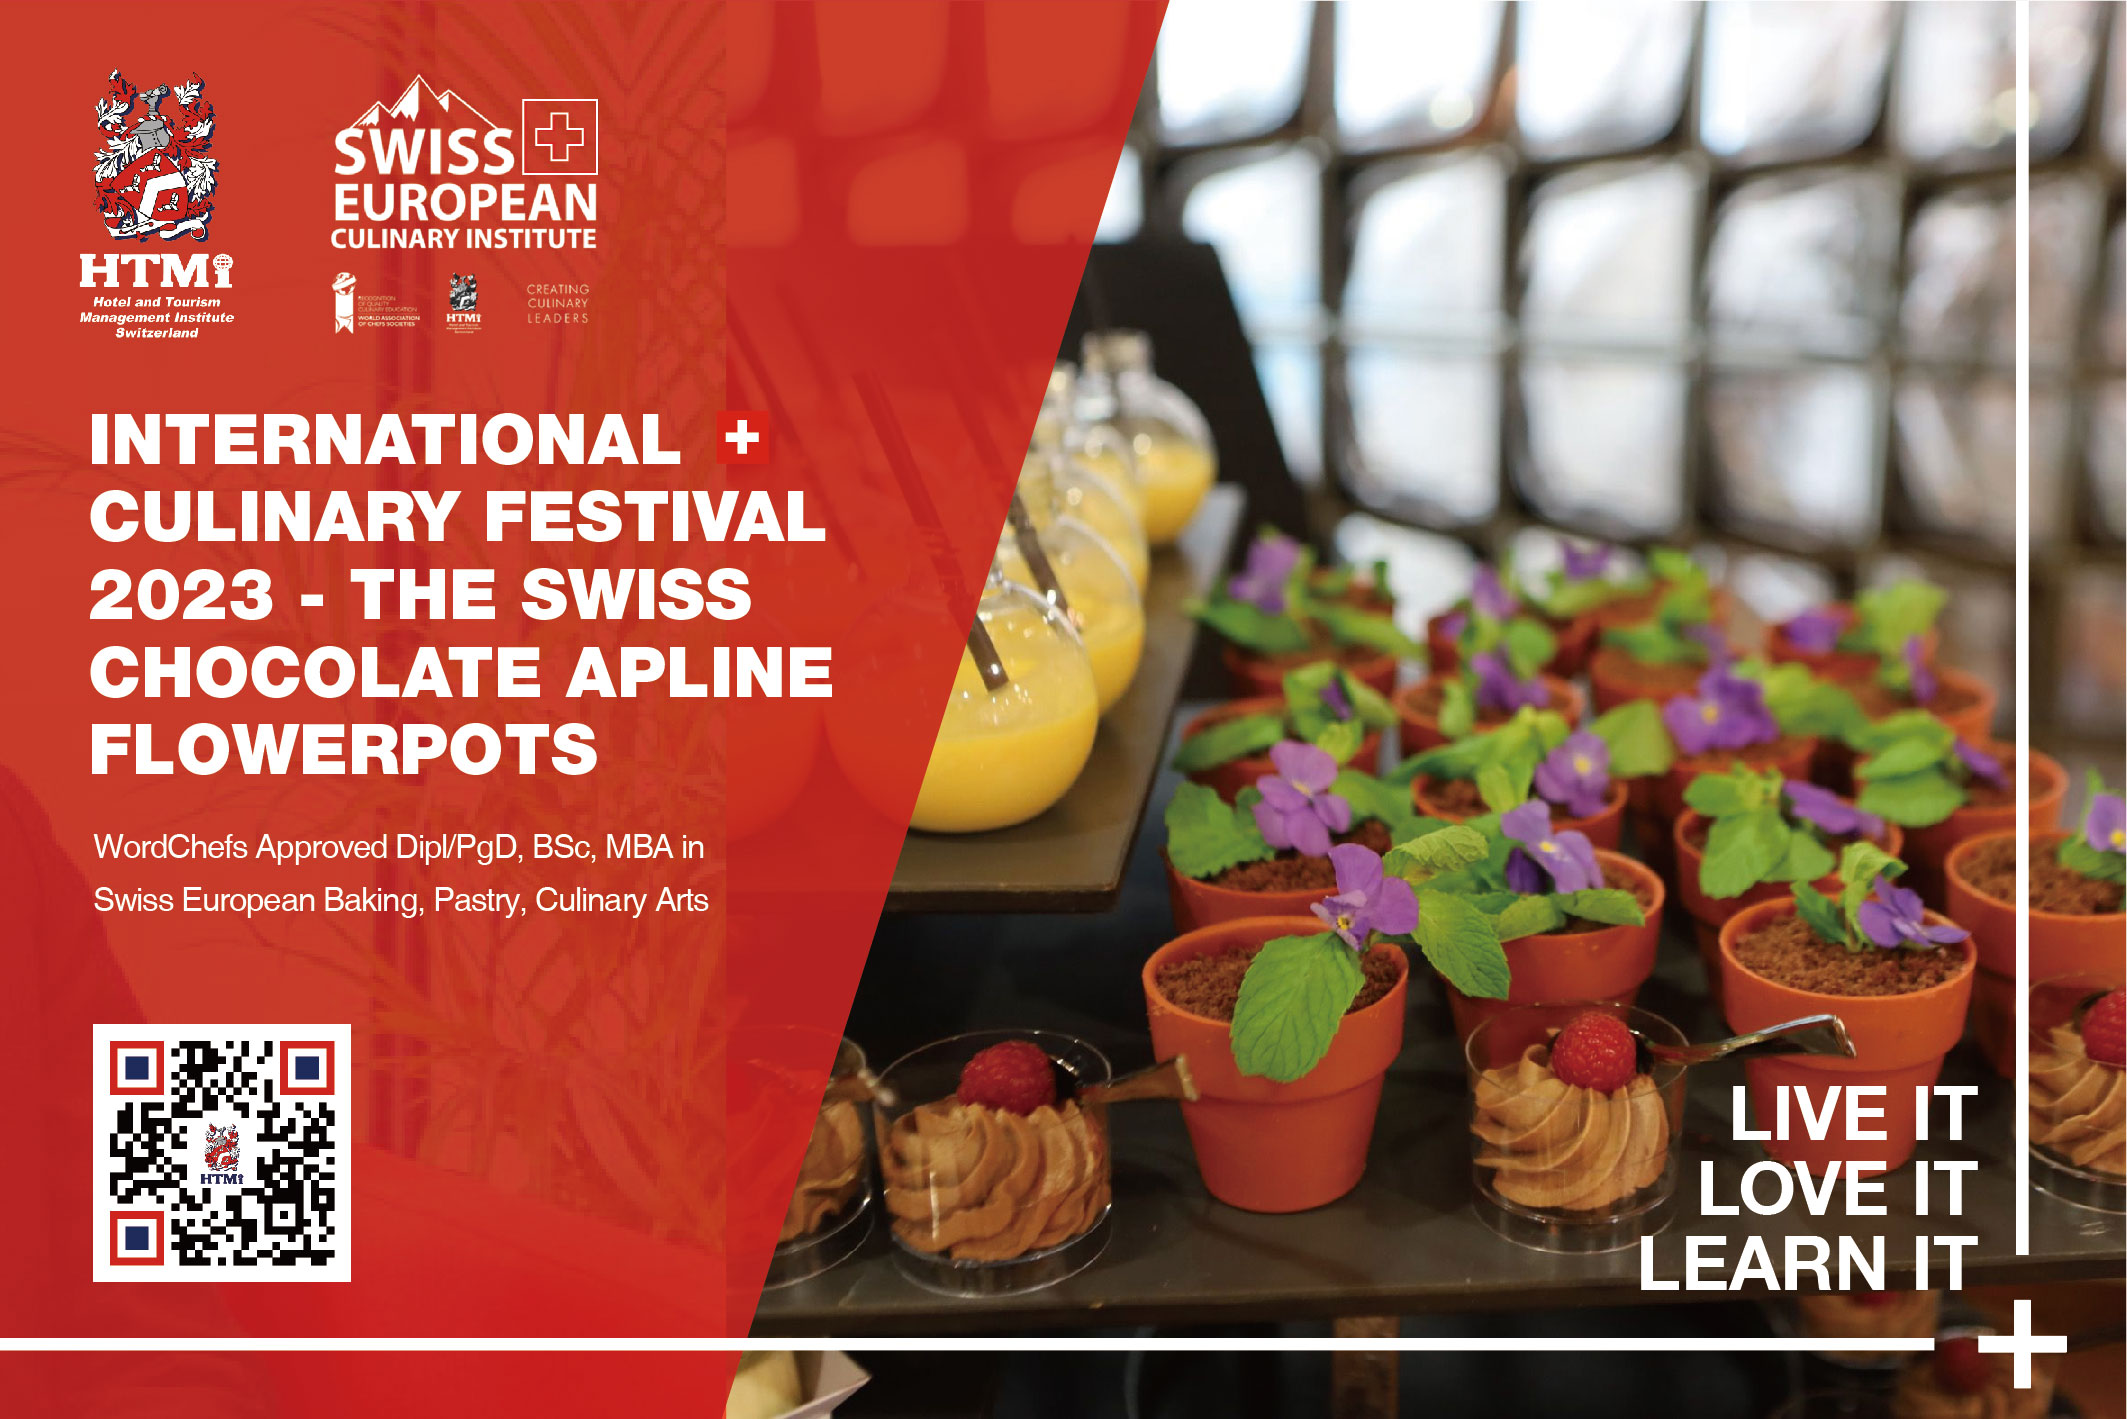 International Culinary Festival 2023 - The Swiss Chocolate Alpine Flowerpots